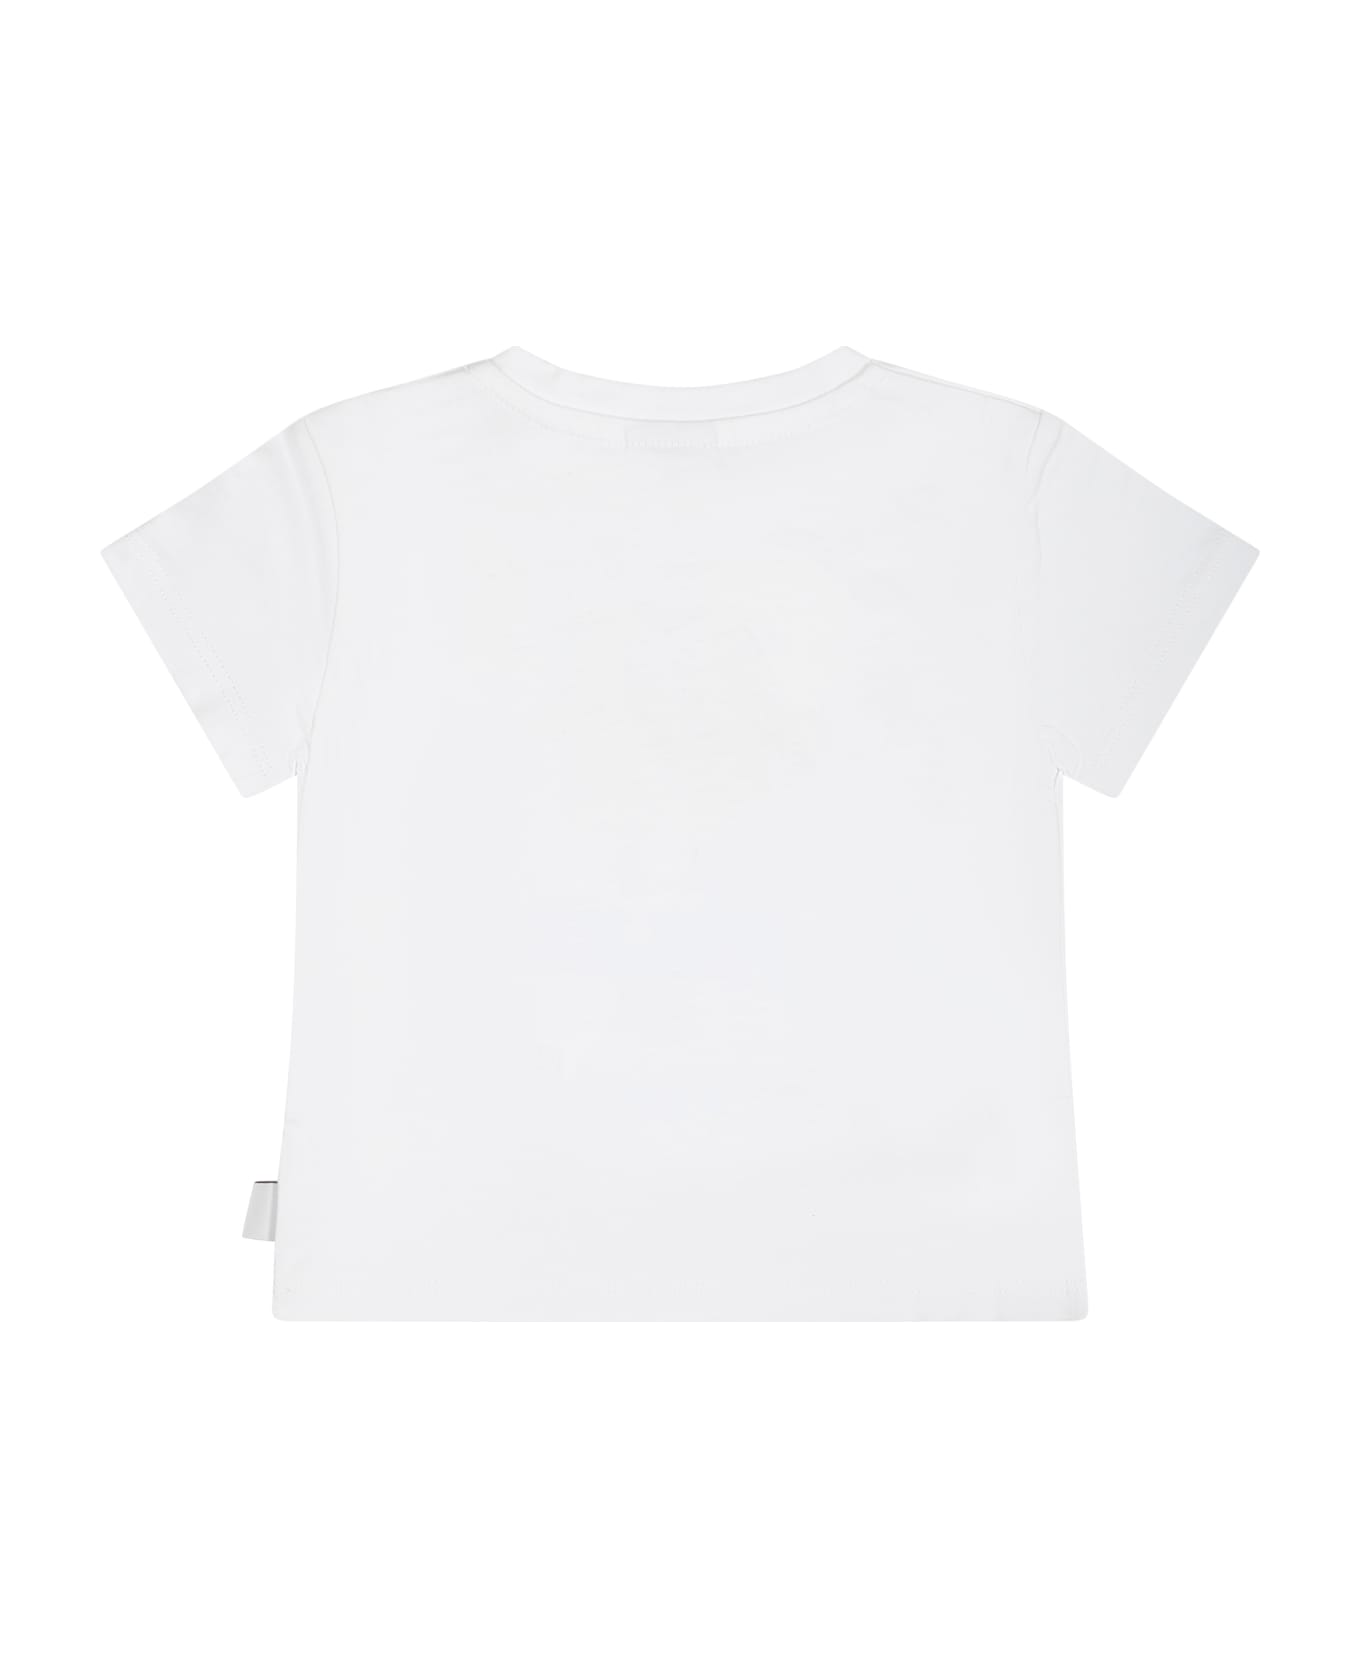 GCDS Mini White T-shirt For Baby Girl With Spongebob Print - White